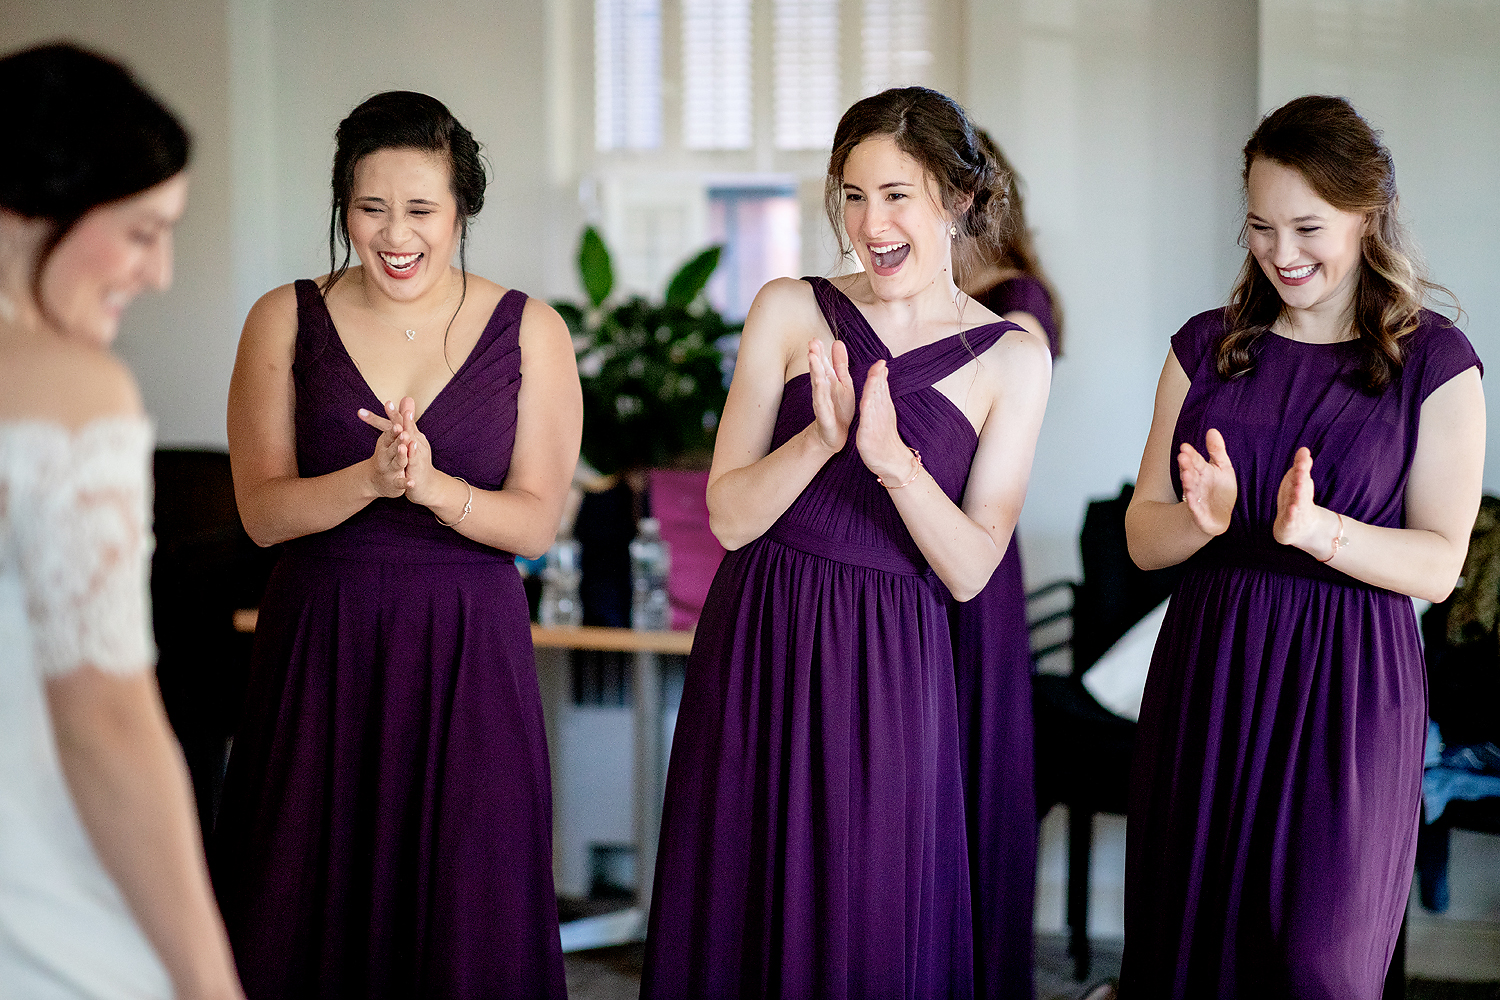 029bridesmaids-first-look-purple-dresses.jpg